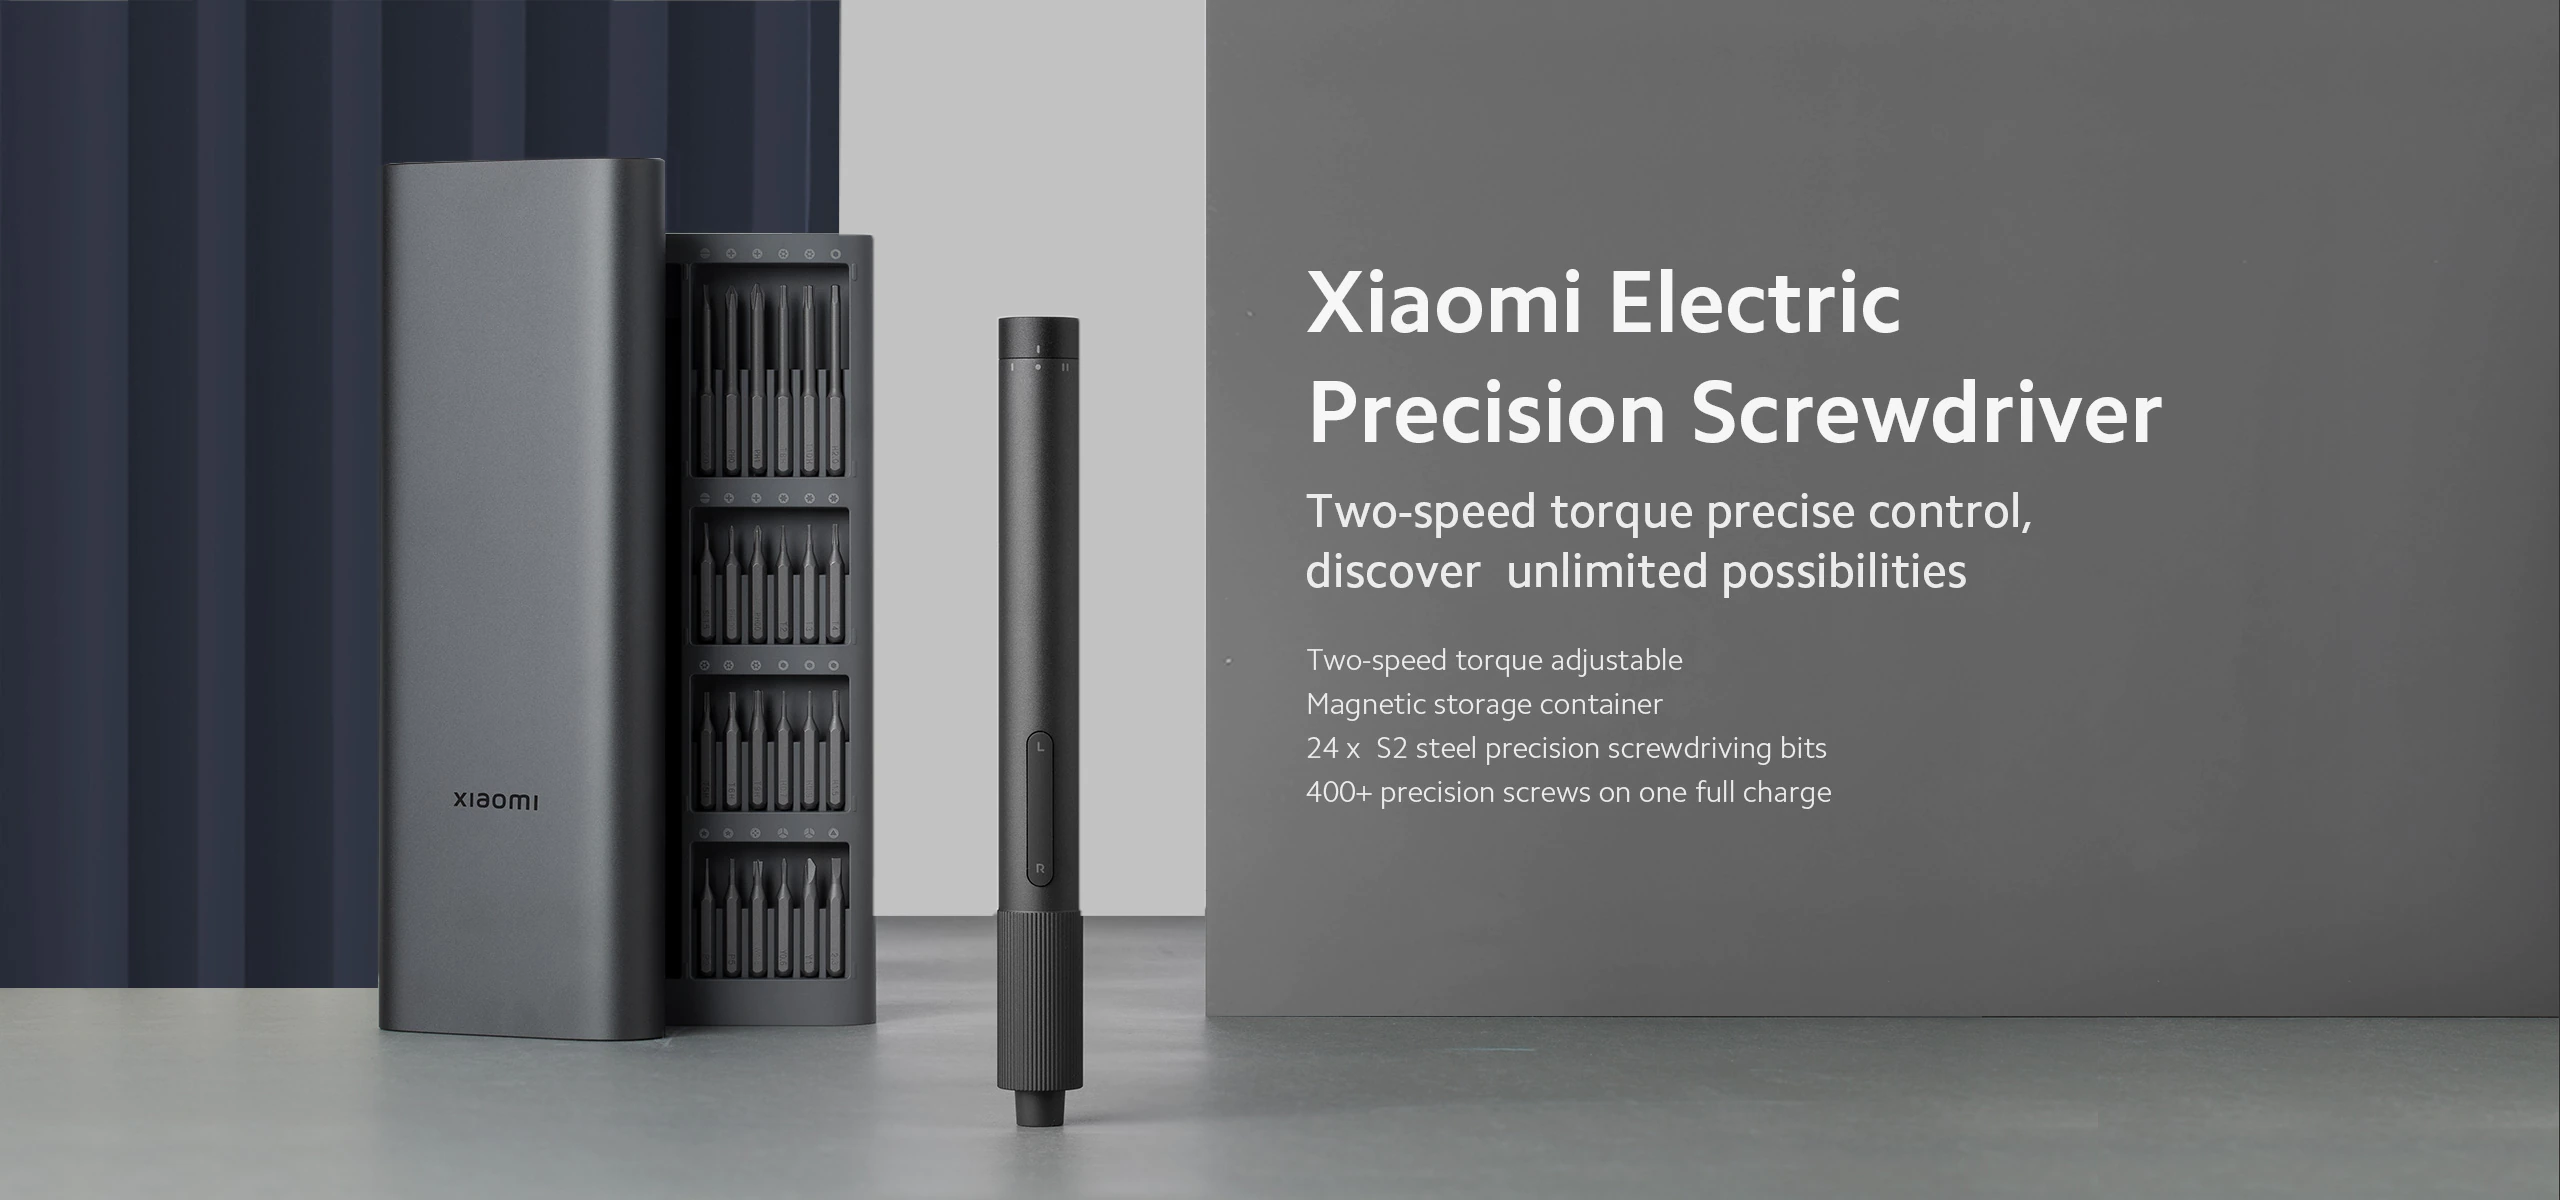 Xiaomi Electric Precision Screwdriver Kit: